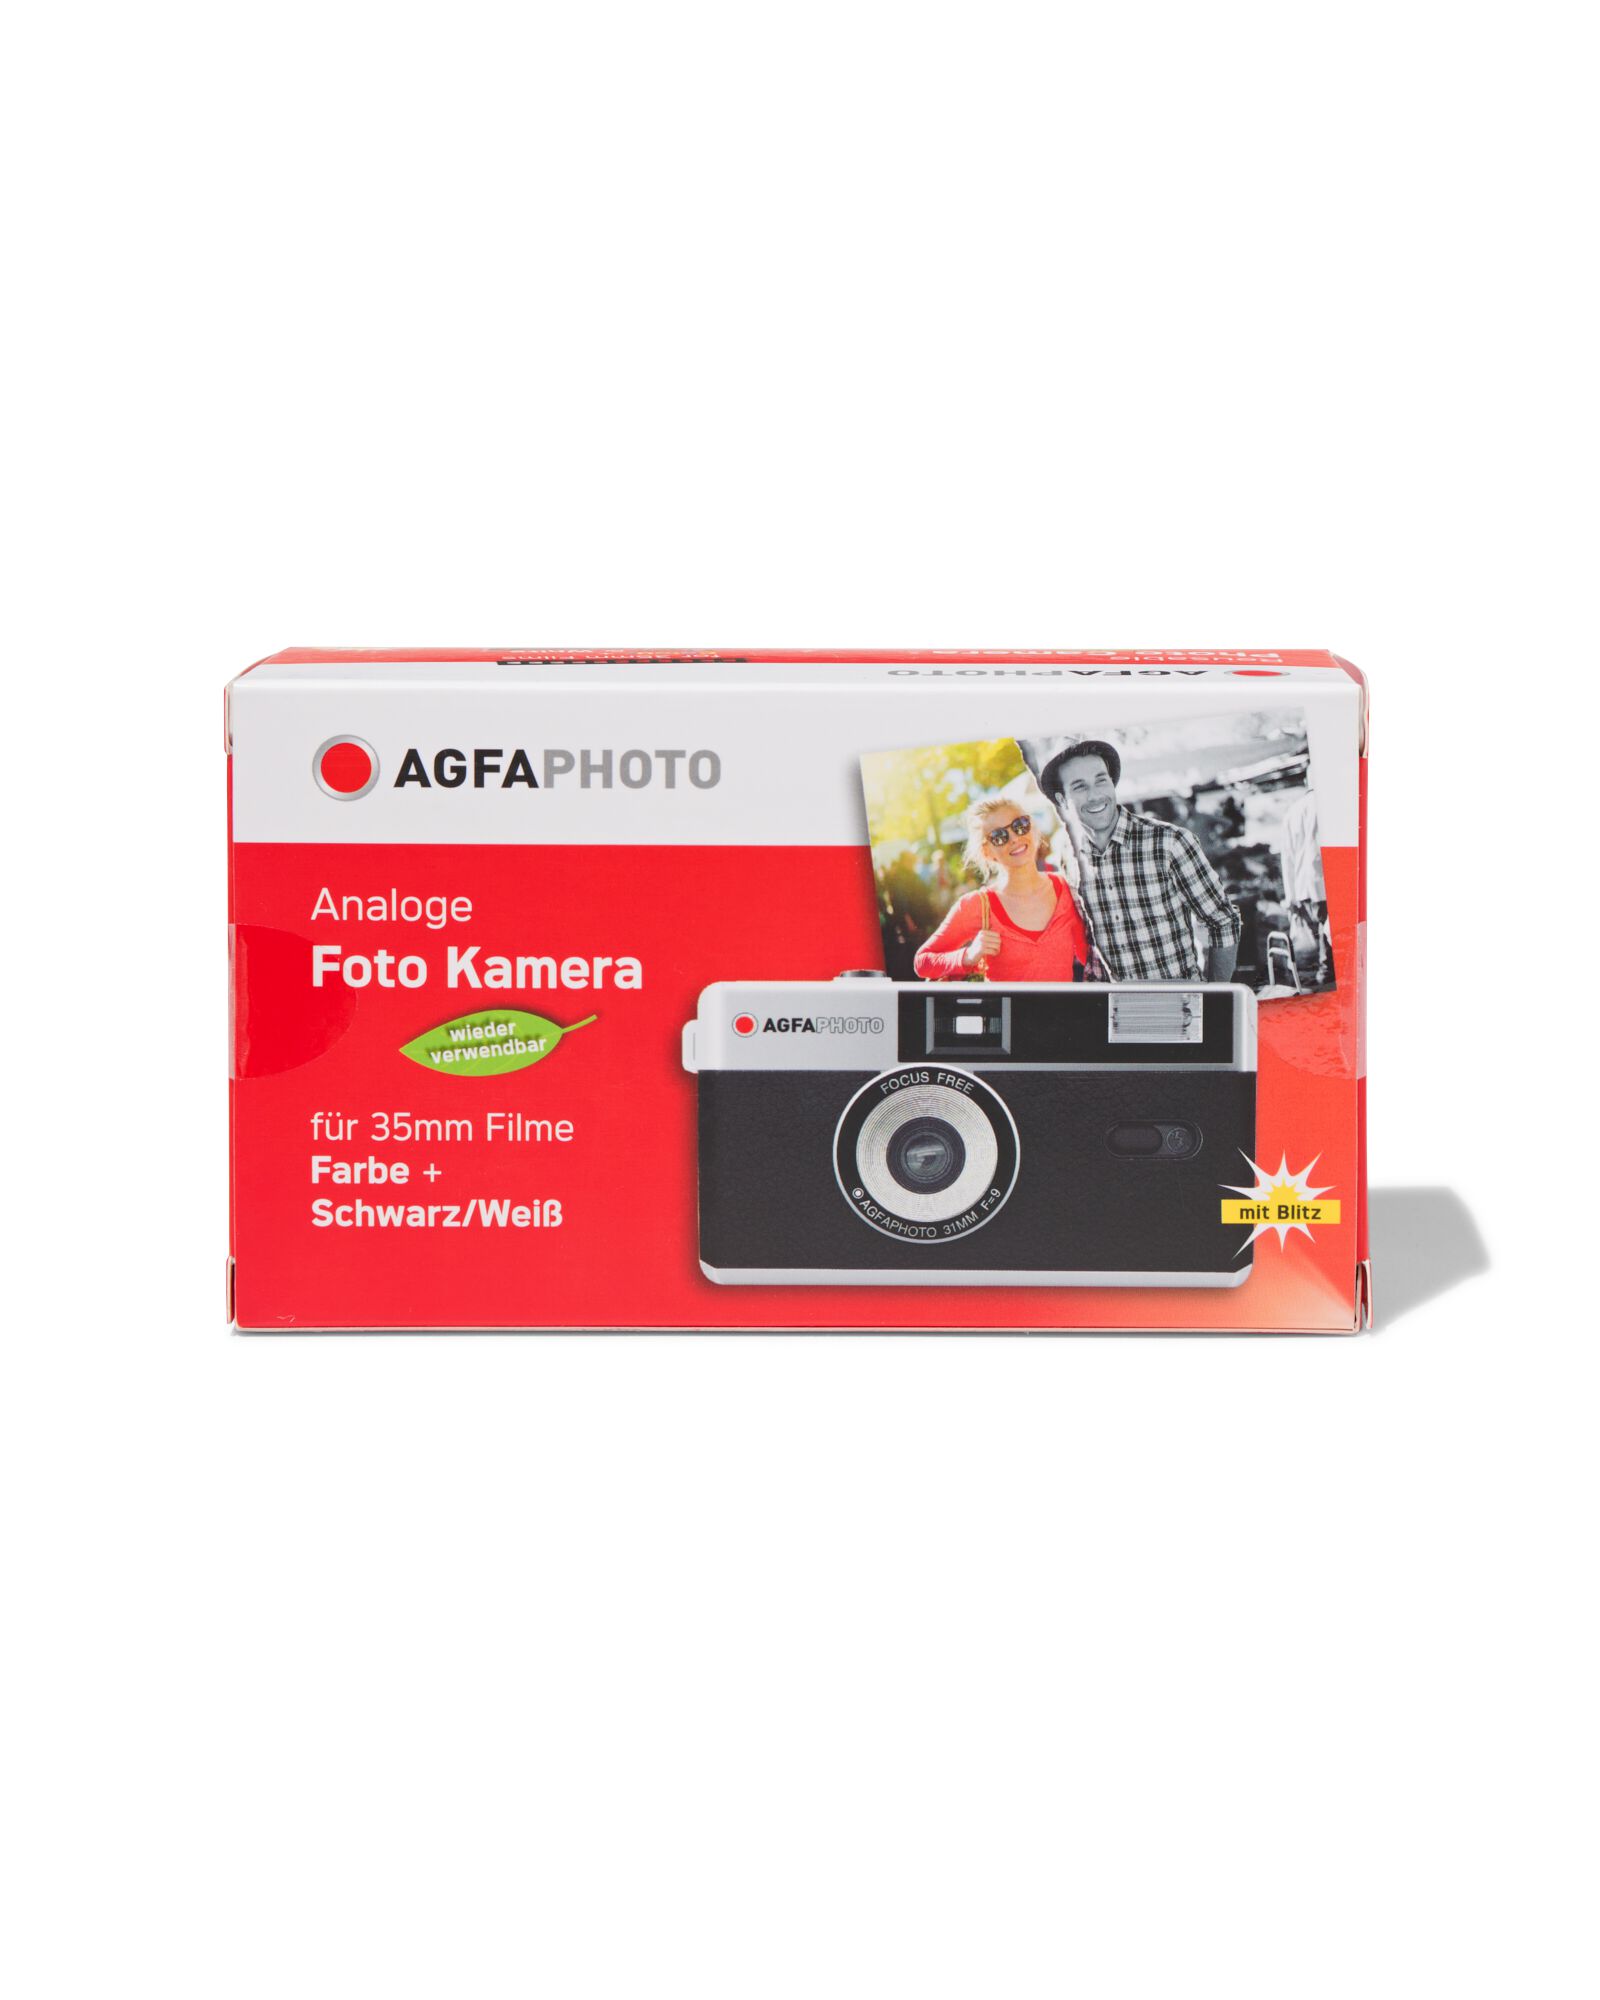 Grote hoeveelheid Kneden Leidingen analoge fotocamera 35mm - HEMA